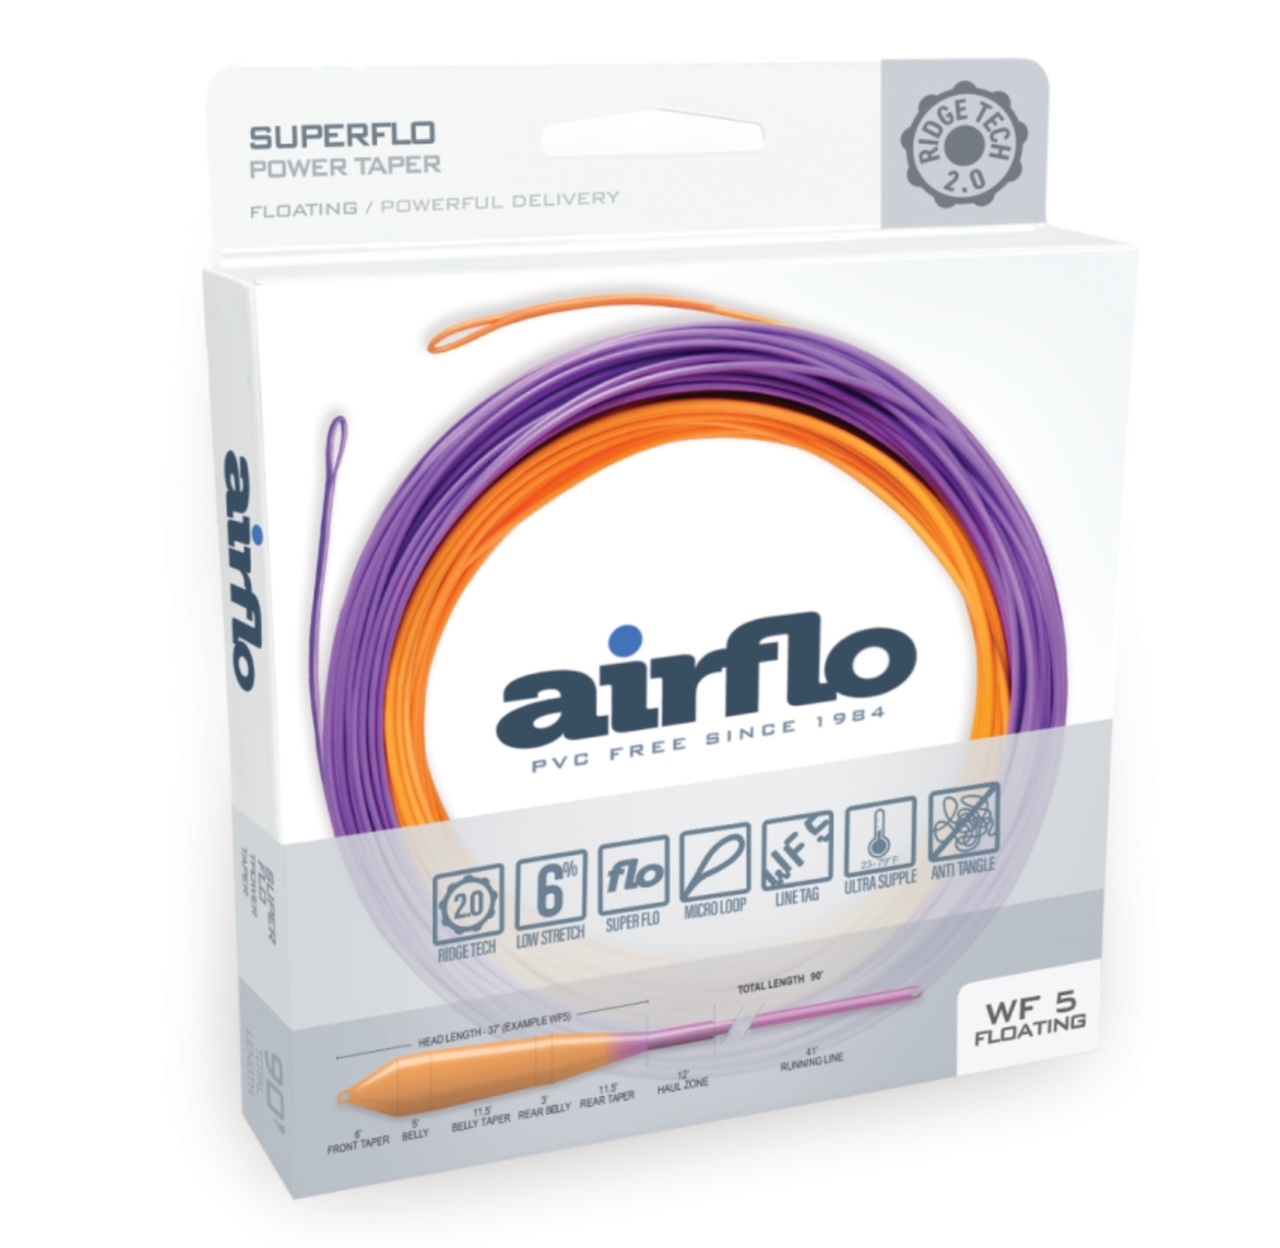 Airflo Superflo Ridge 2.0 Power Taper - WF5F - Sunburst/Purple